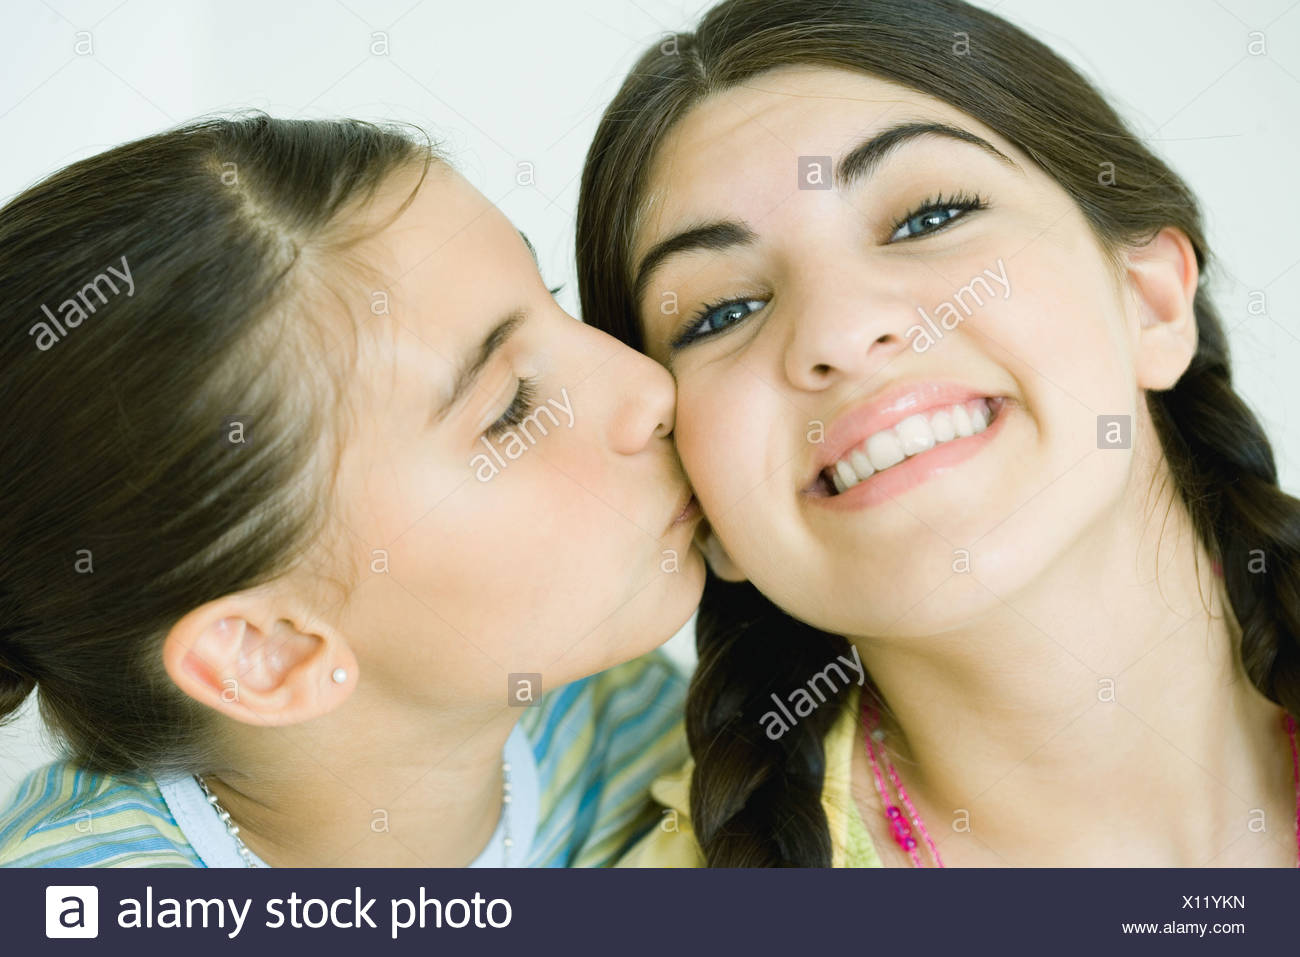 girls kissing pics Teen